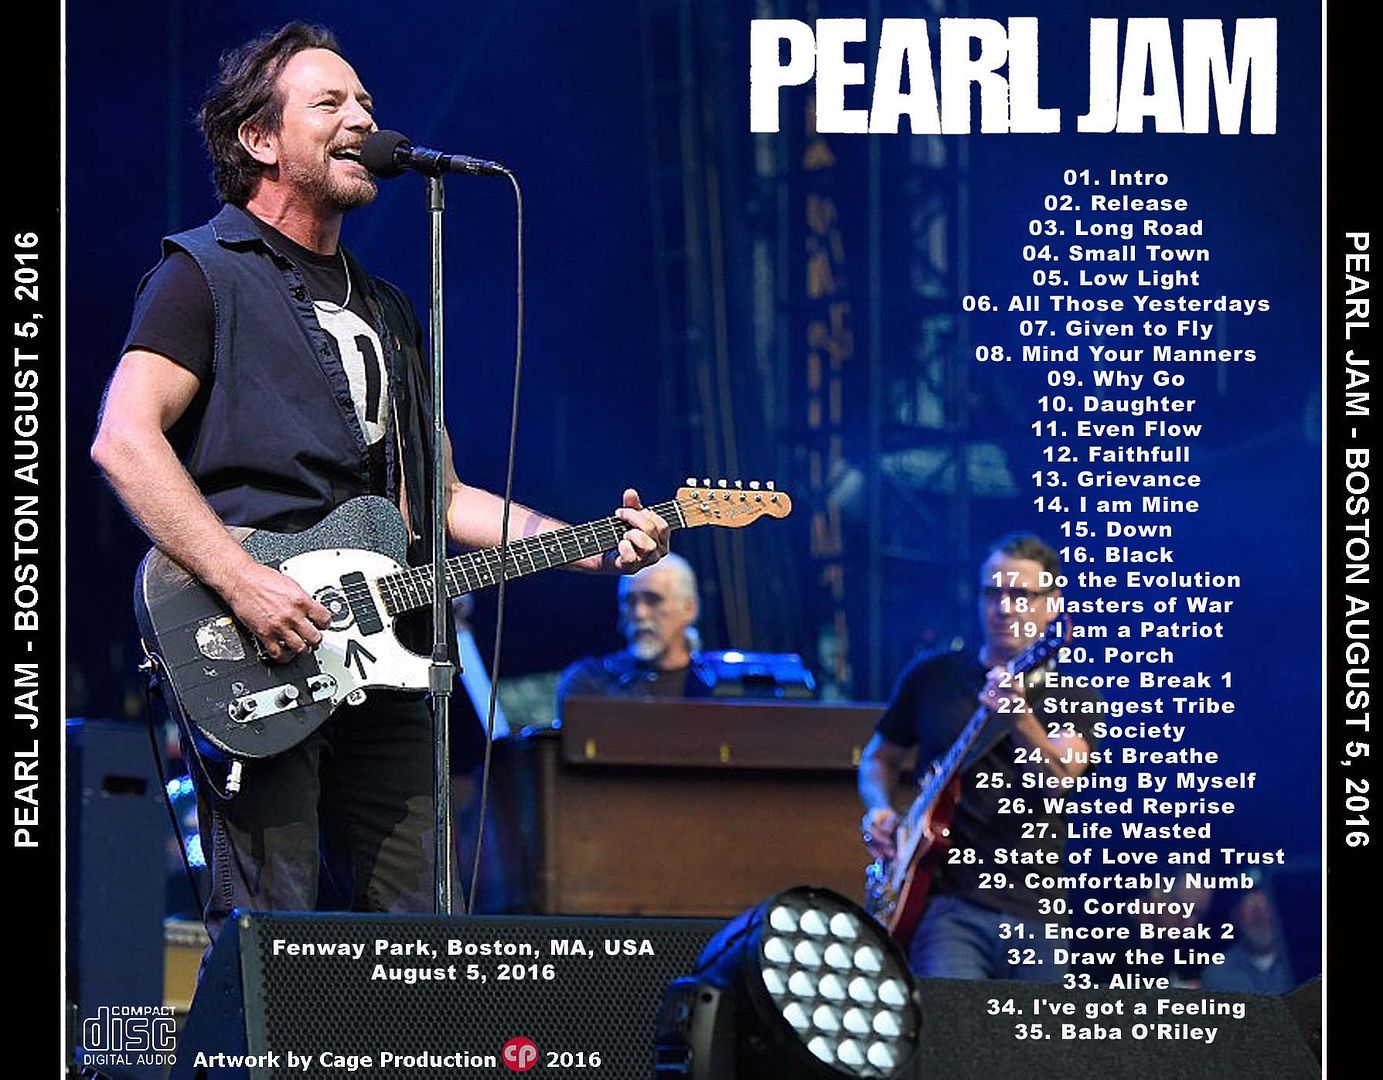 photo Pearl Jam-Boston August 5 2016 back_zps23hdptnv.jpg